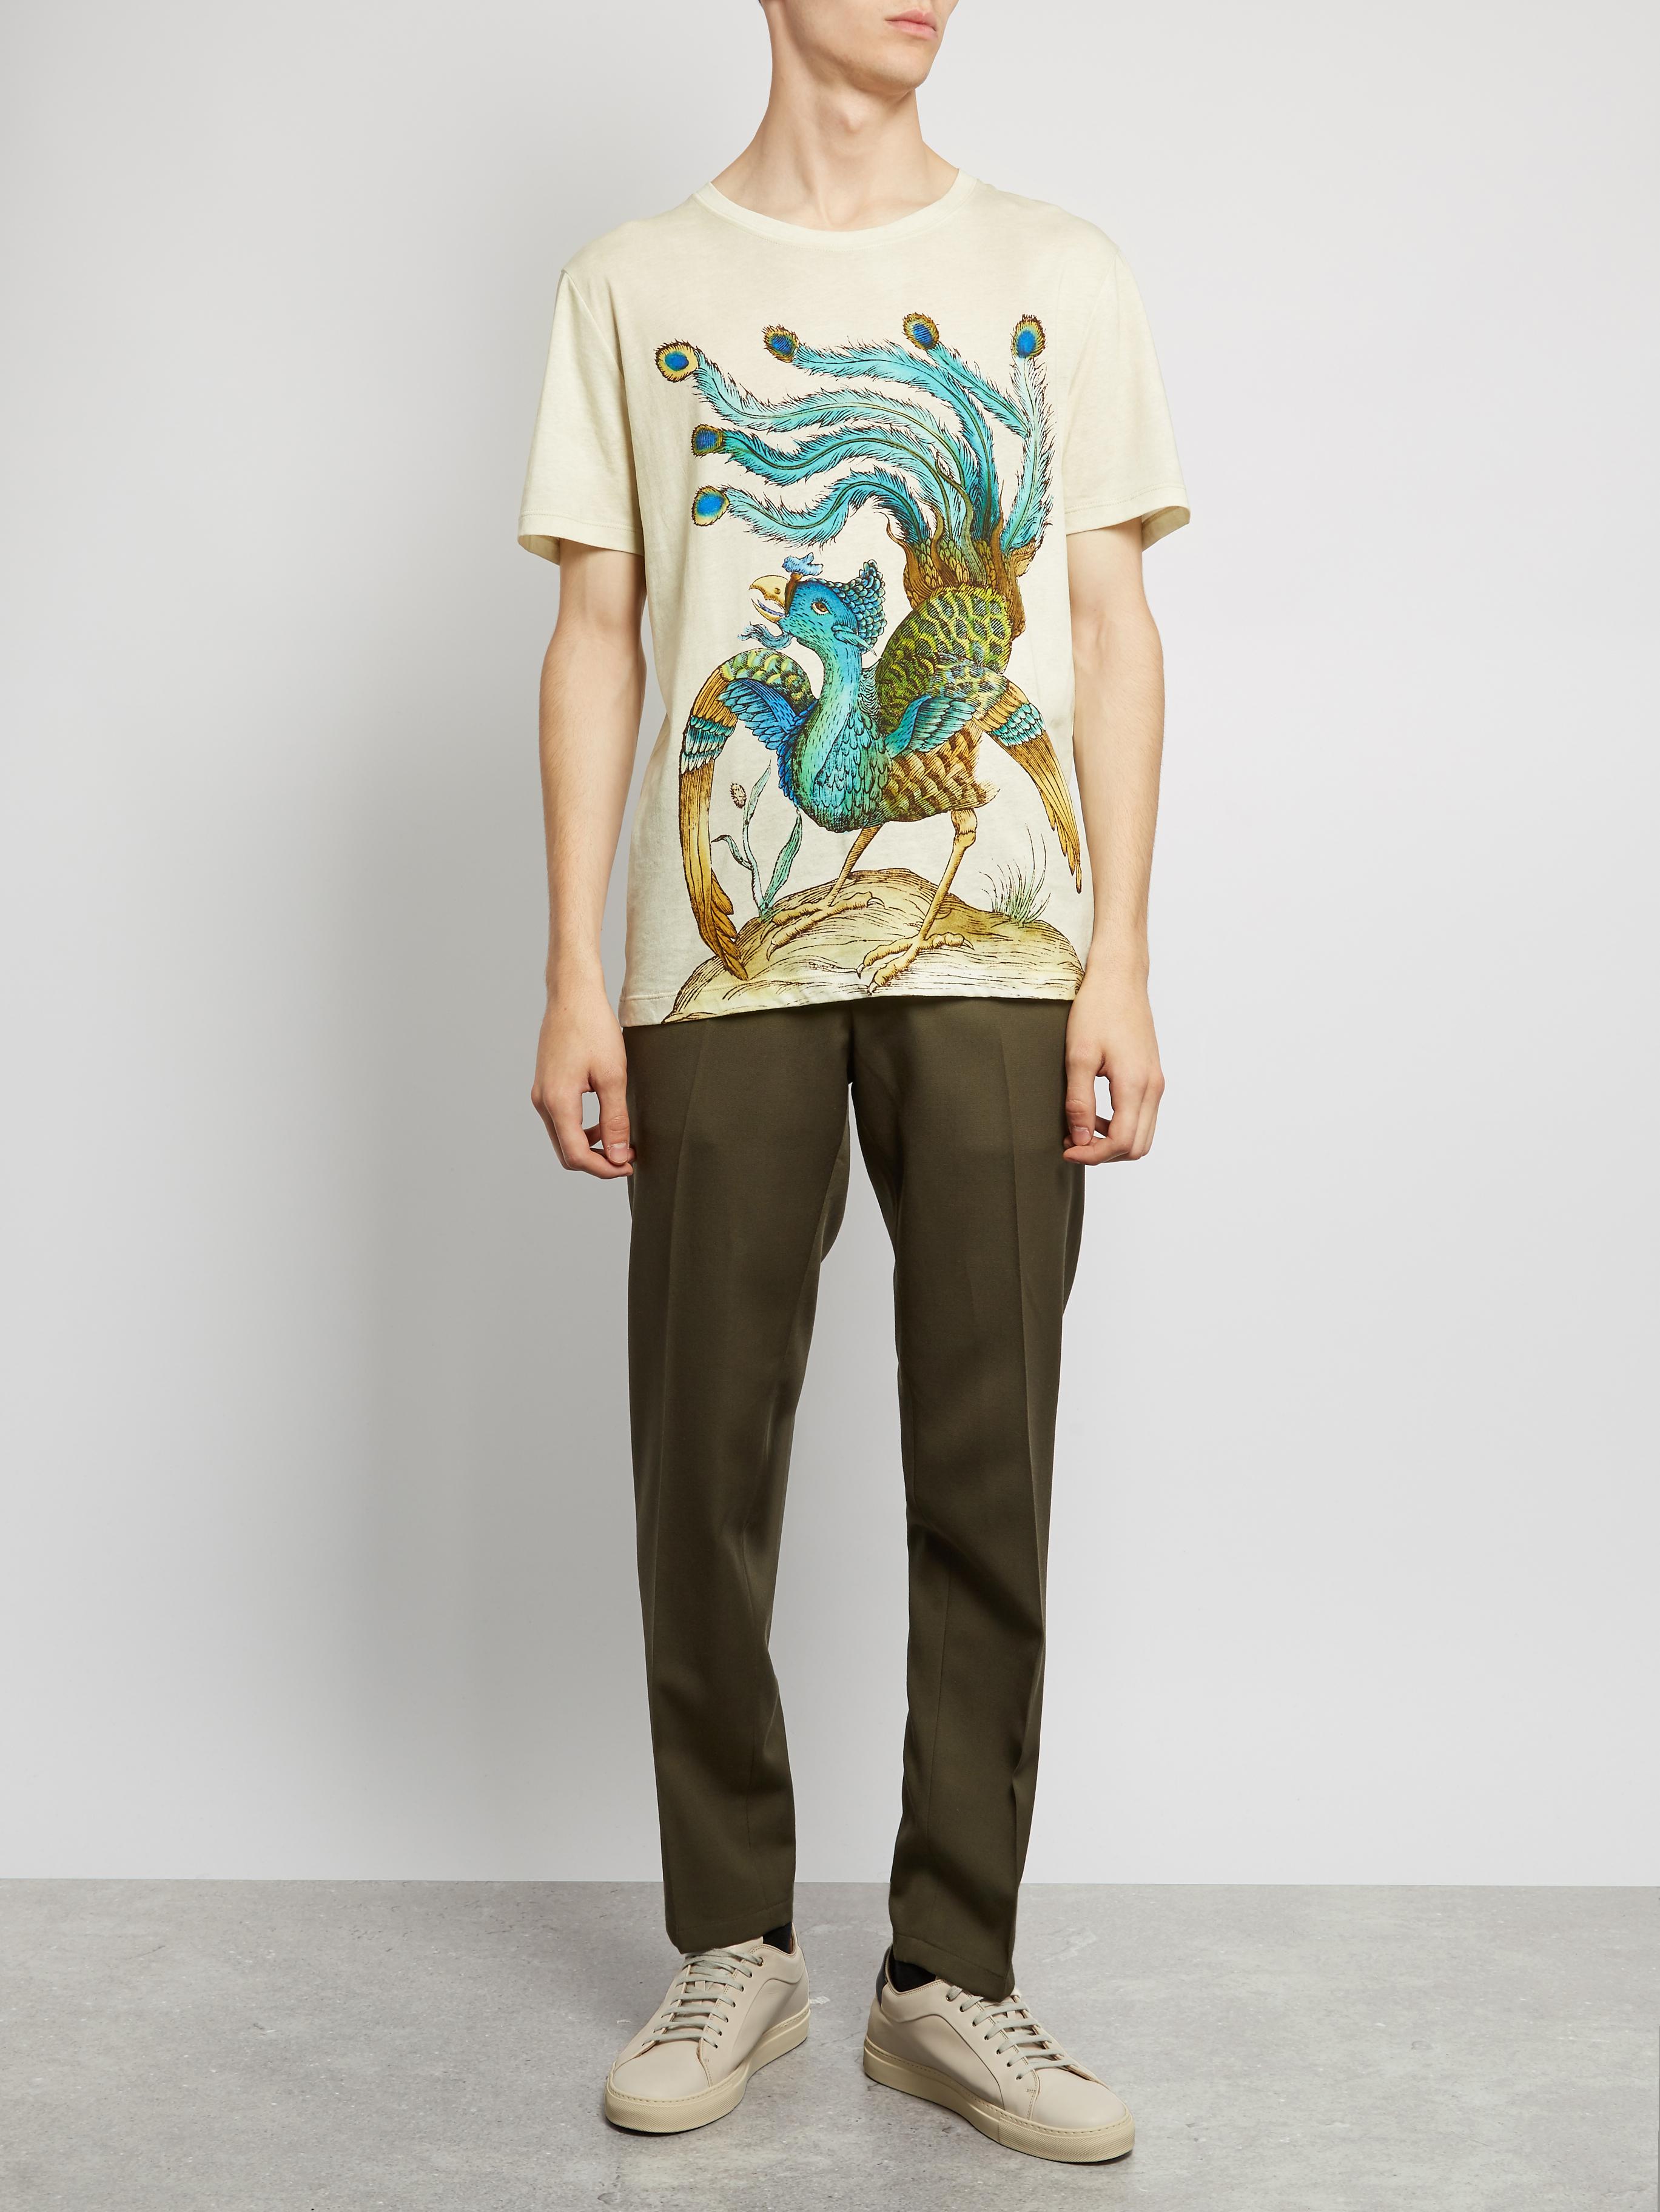 Gucci Peacock-print Cotton T-shirt for Men - Lyst